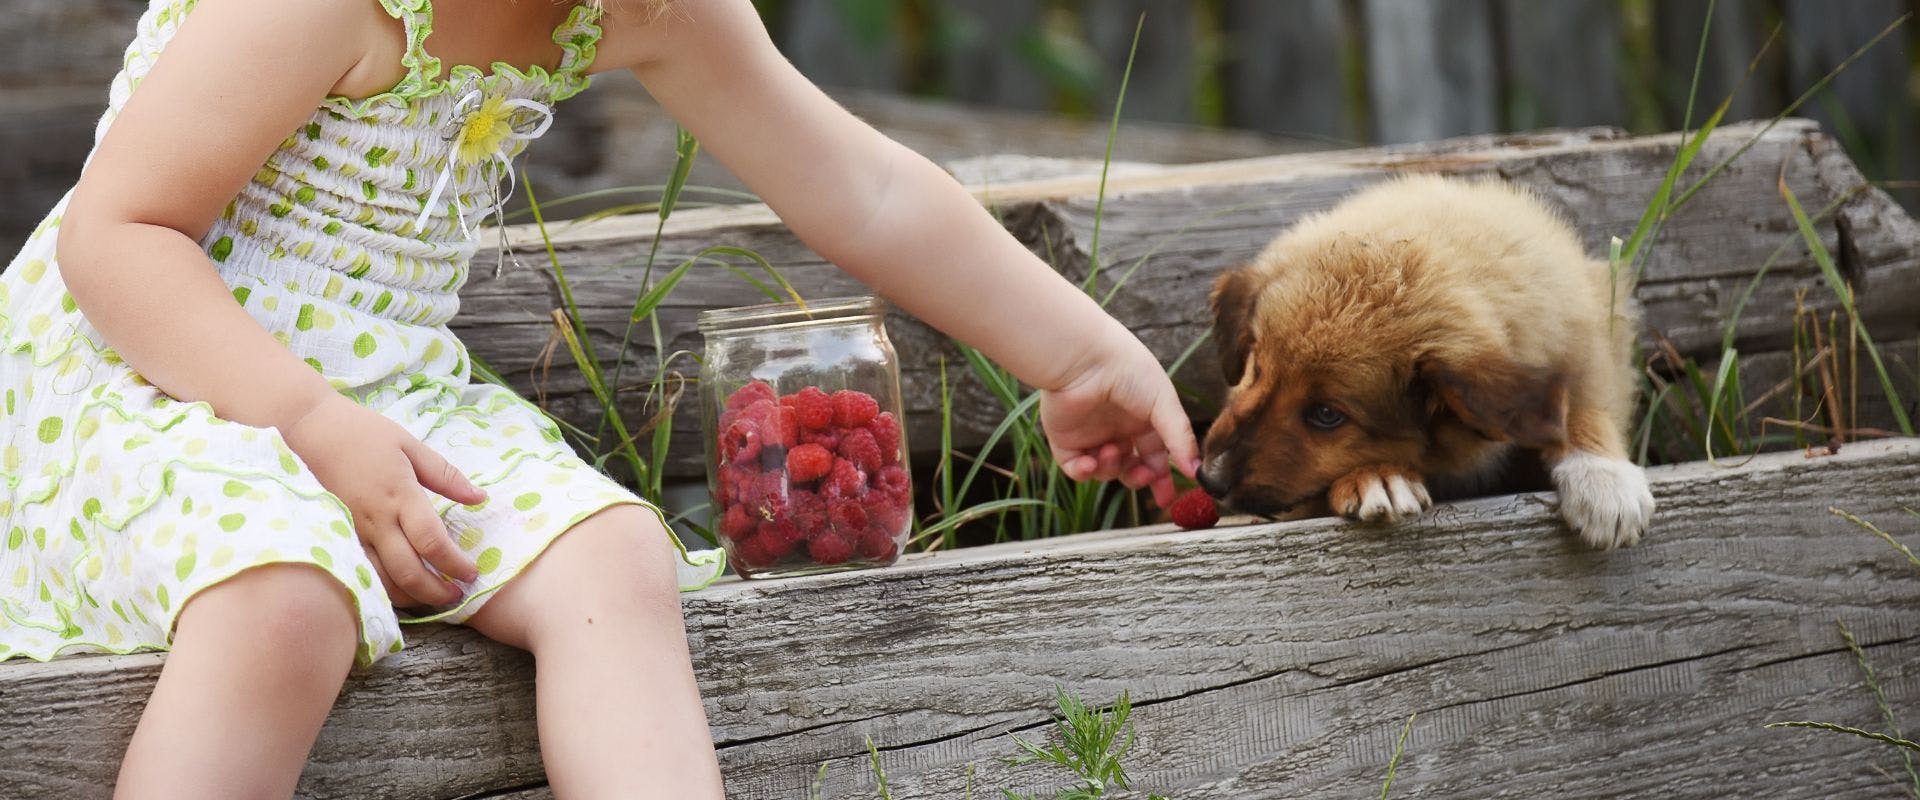 Small child feeding dog raspberries